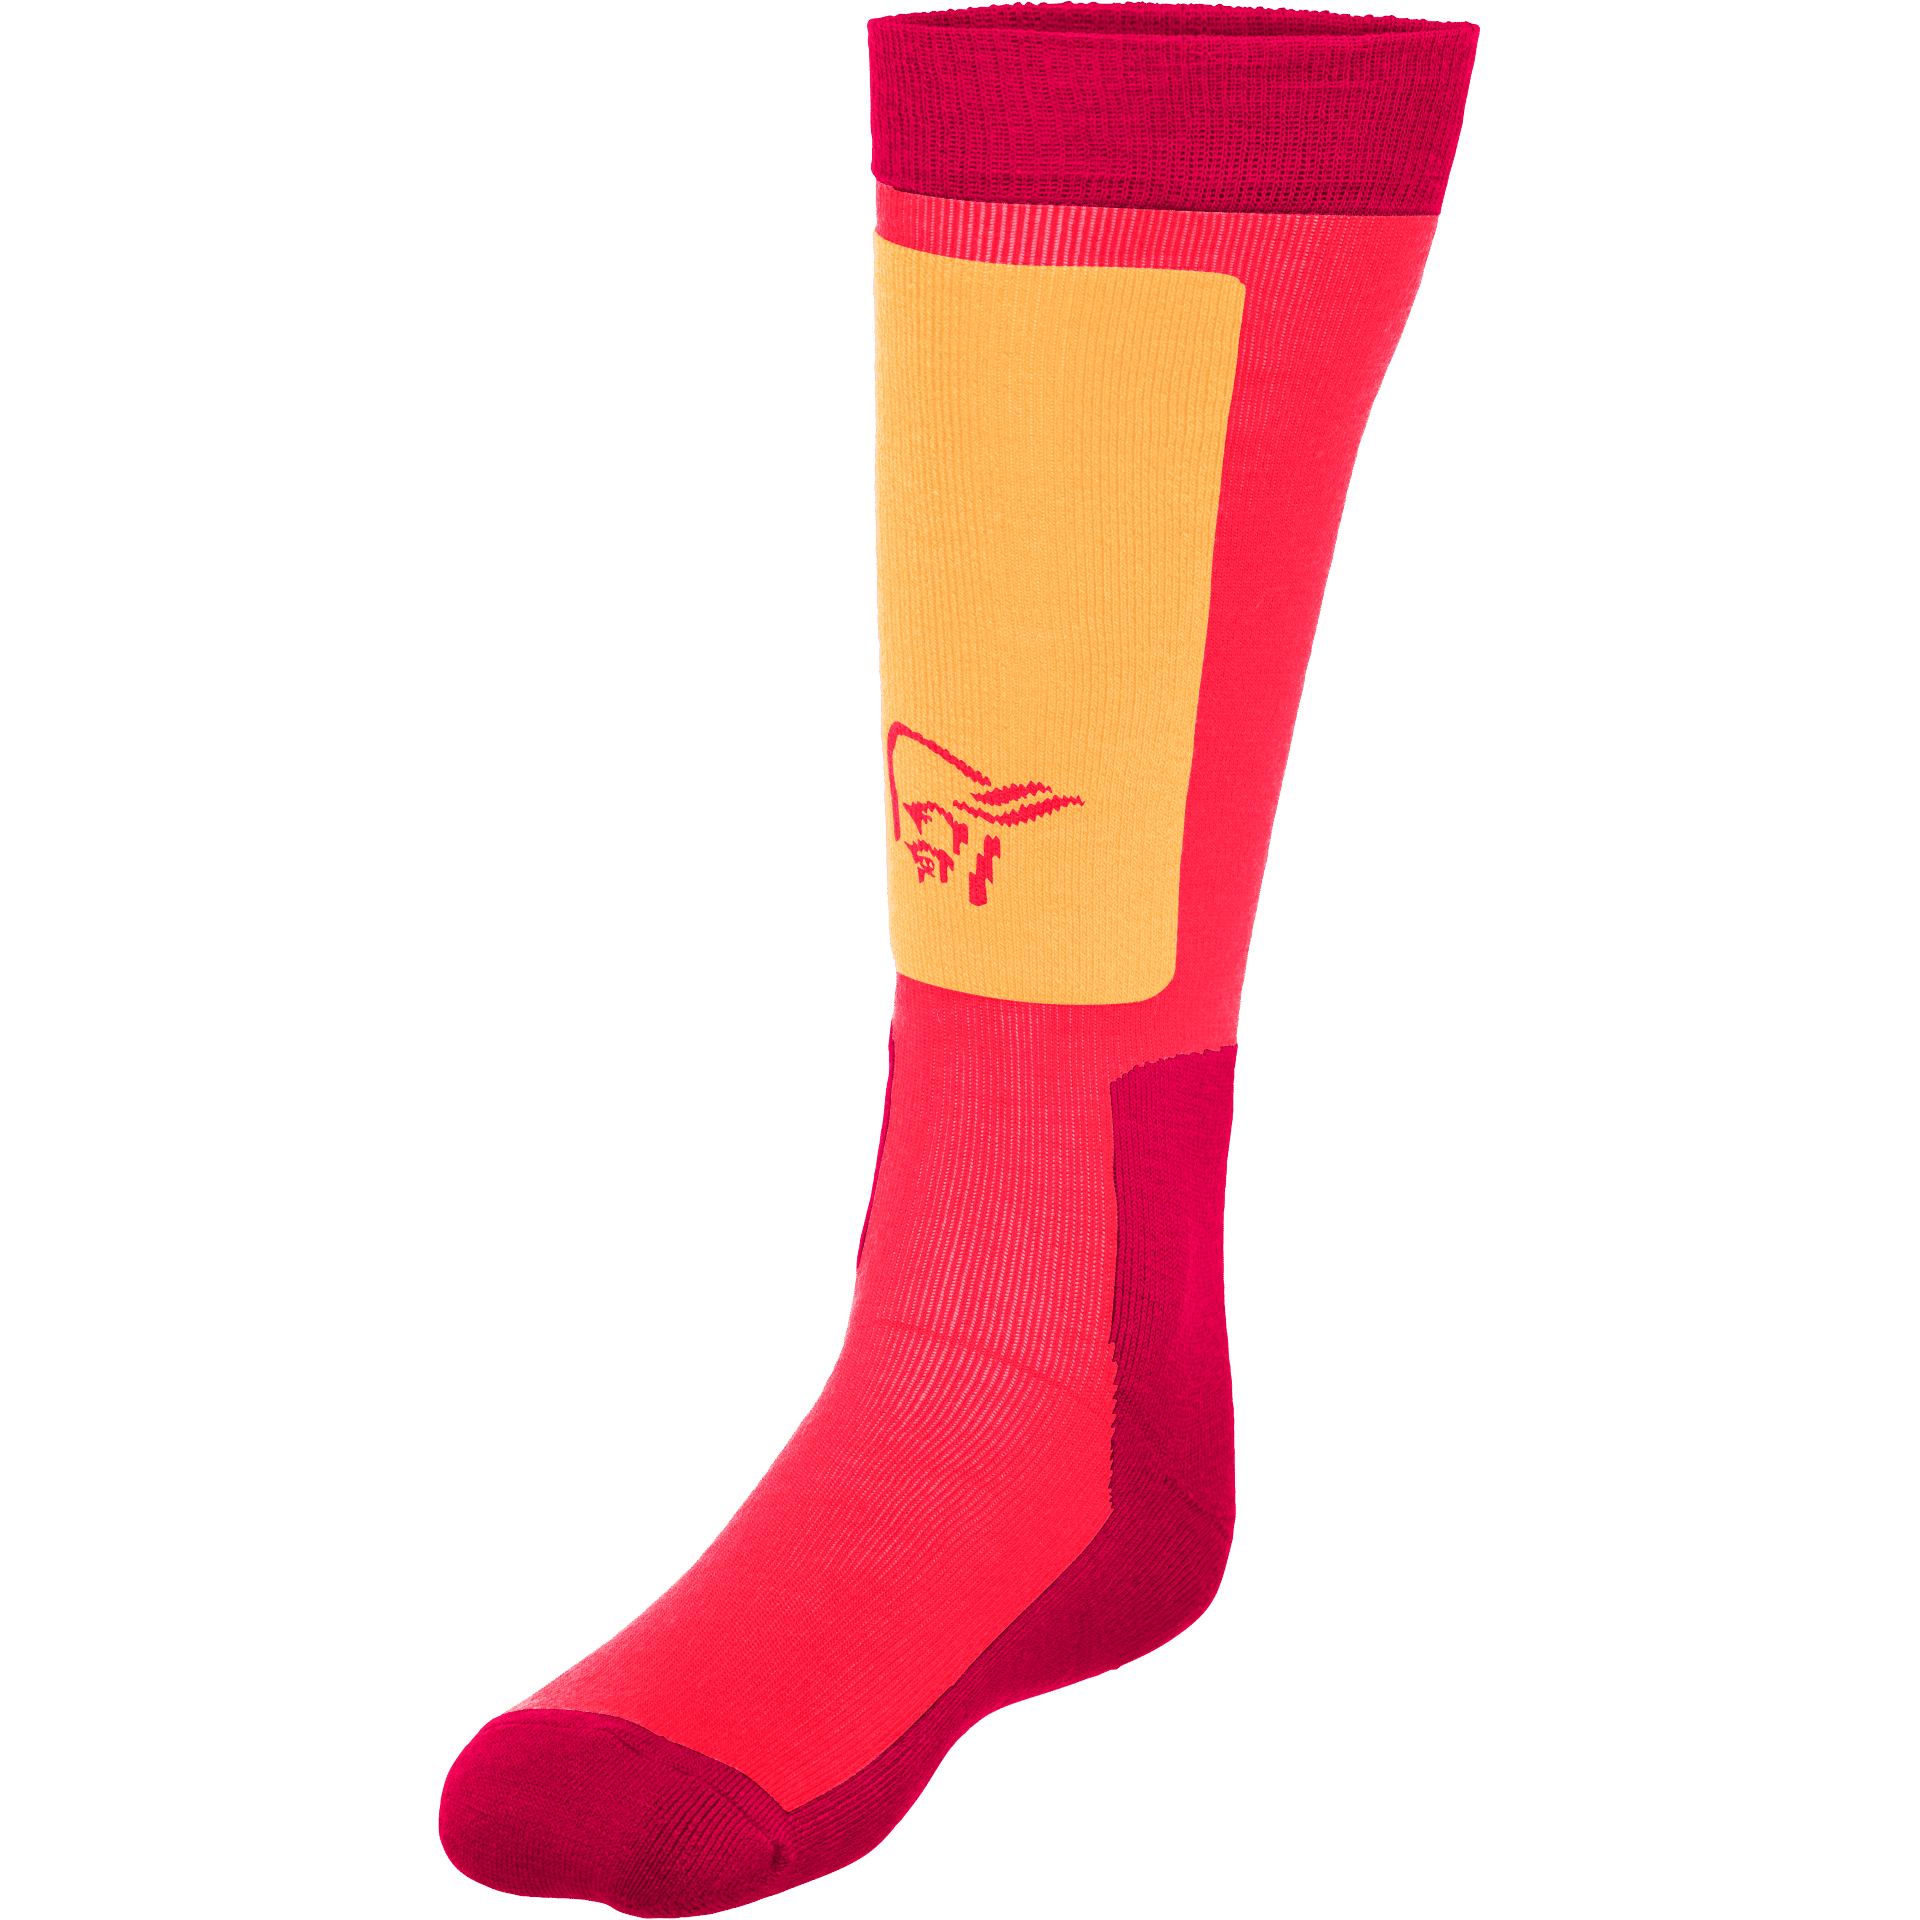 Norrøna Lofoten Mid Weight Merino Socks Long - Ski socks